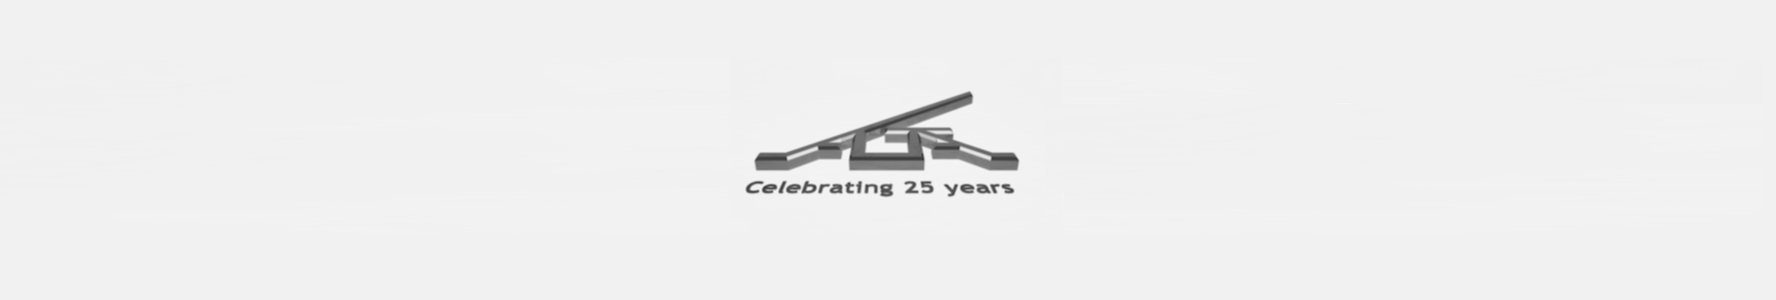 ALTA GROUP Celebrating 25 years